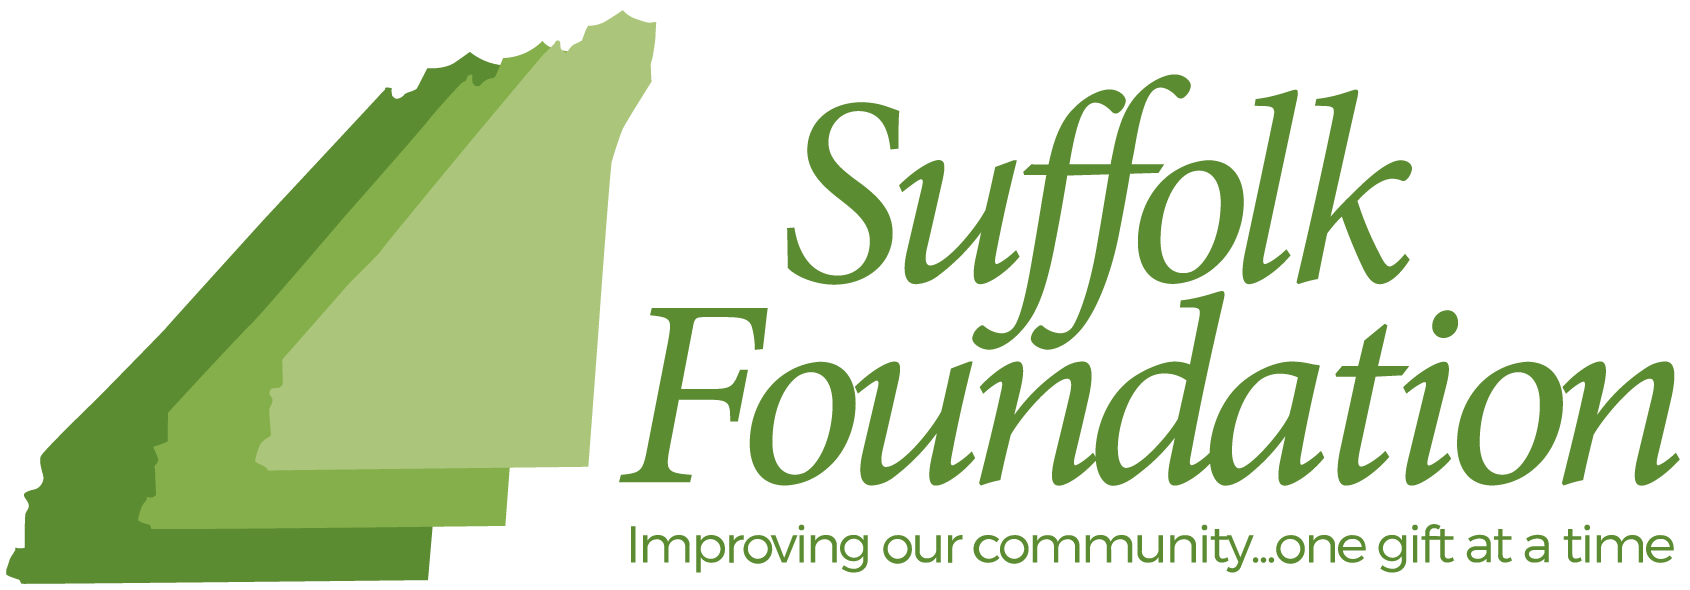 Suffolk foundationlogo.png